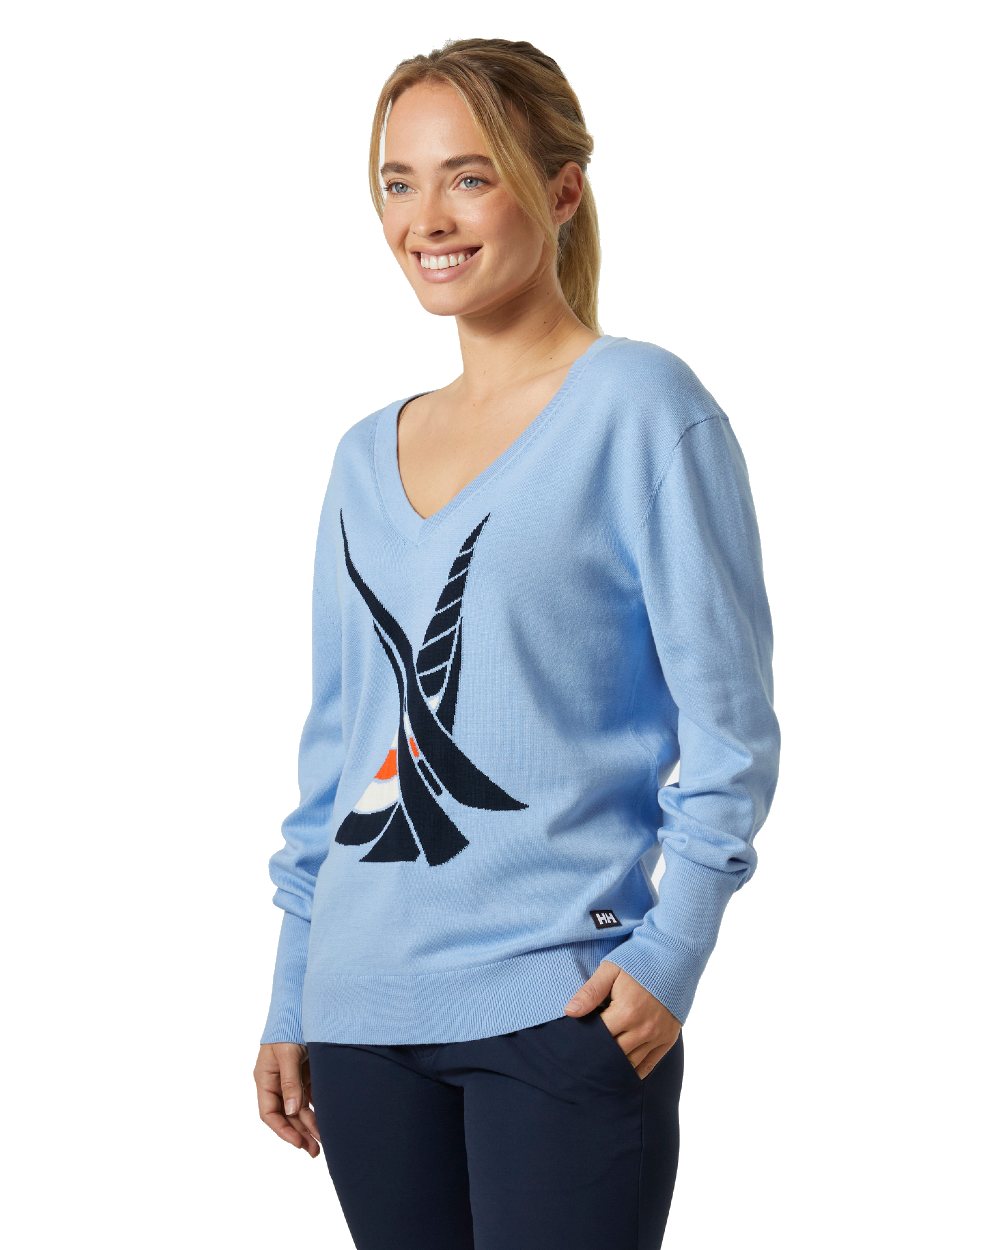 Bright Blue Coloured Helly Hansen Womens Salt Summer Knit Sweater on grey background 